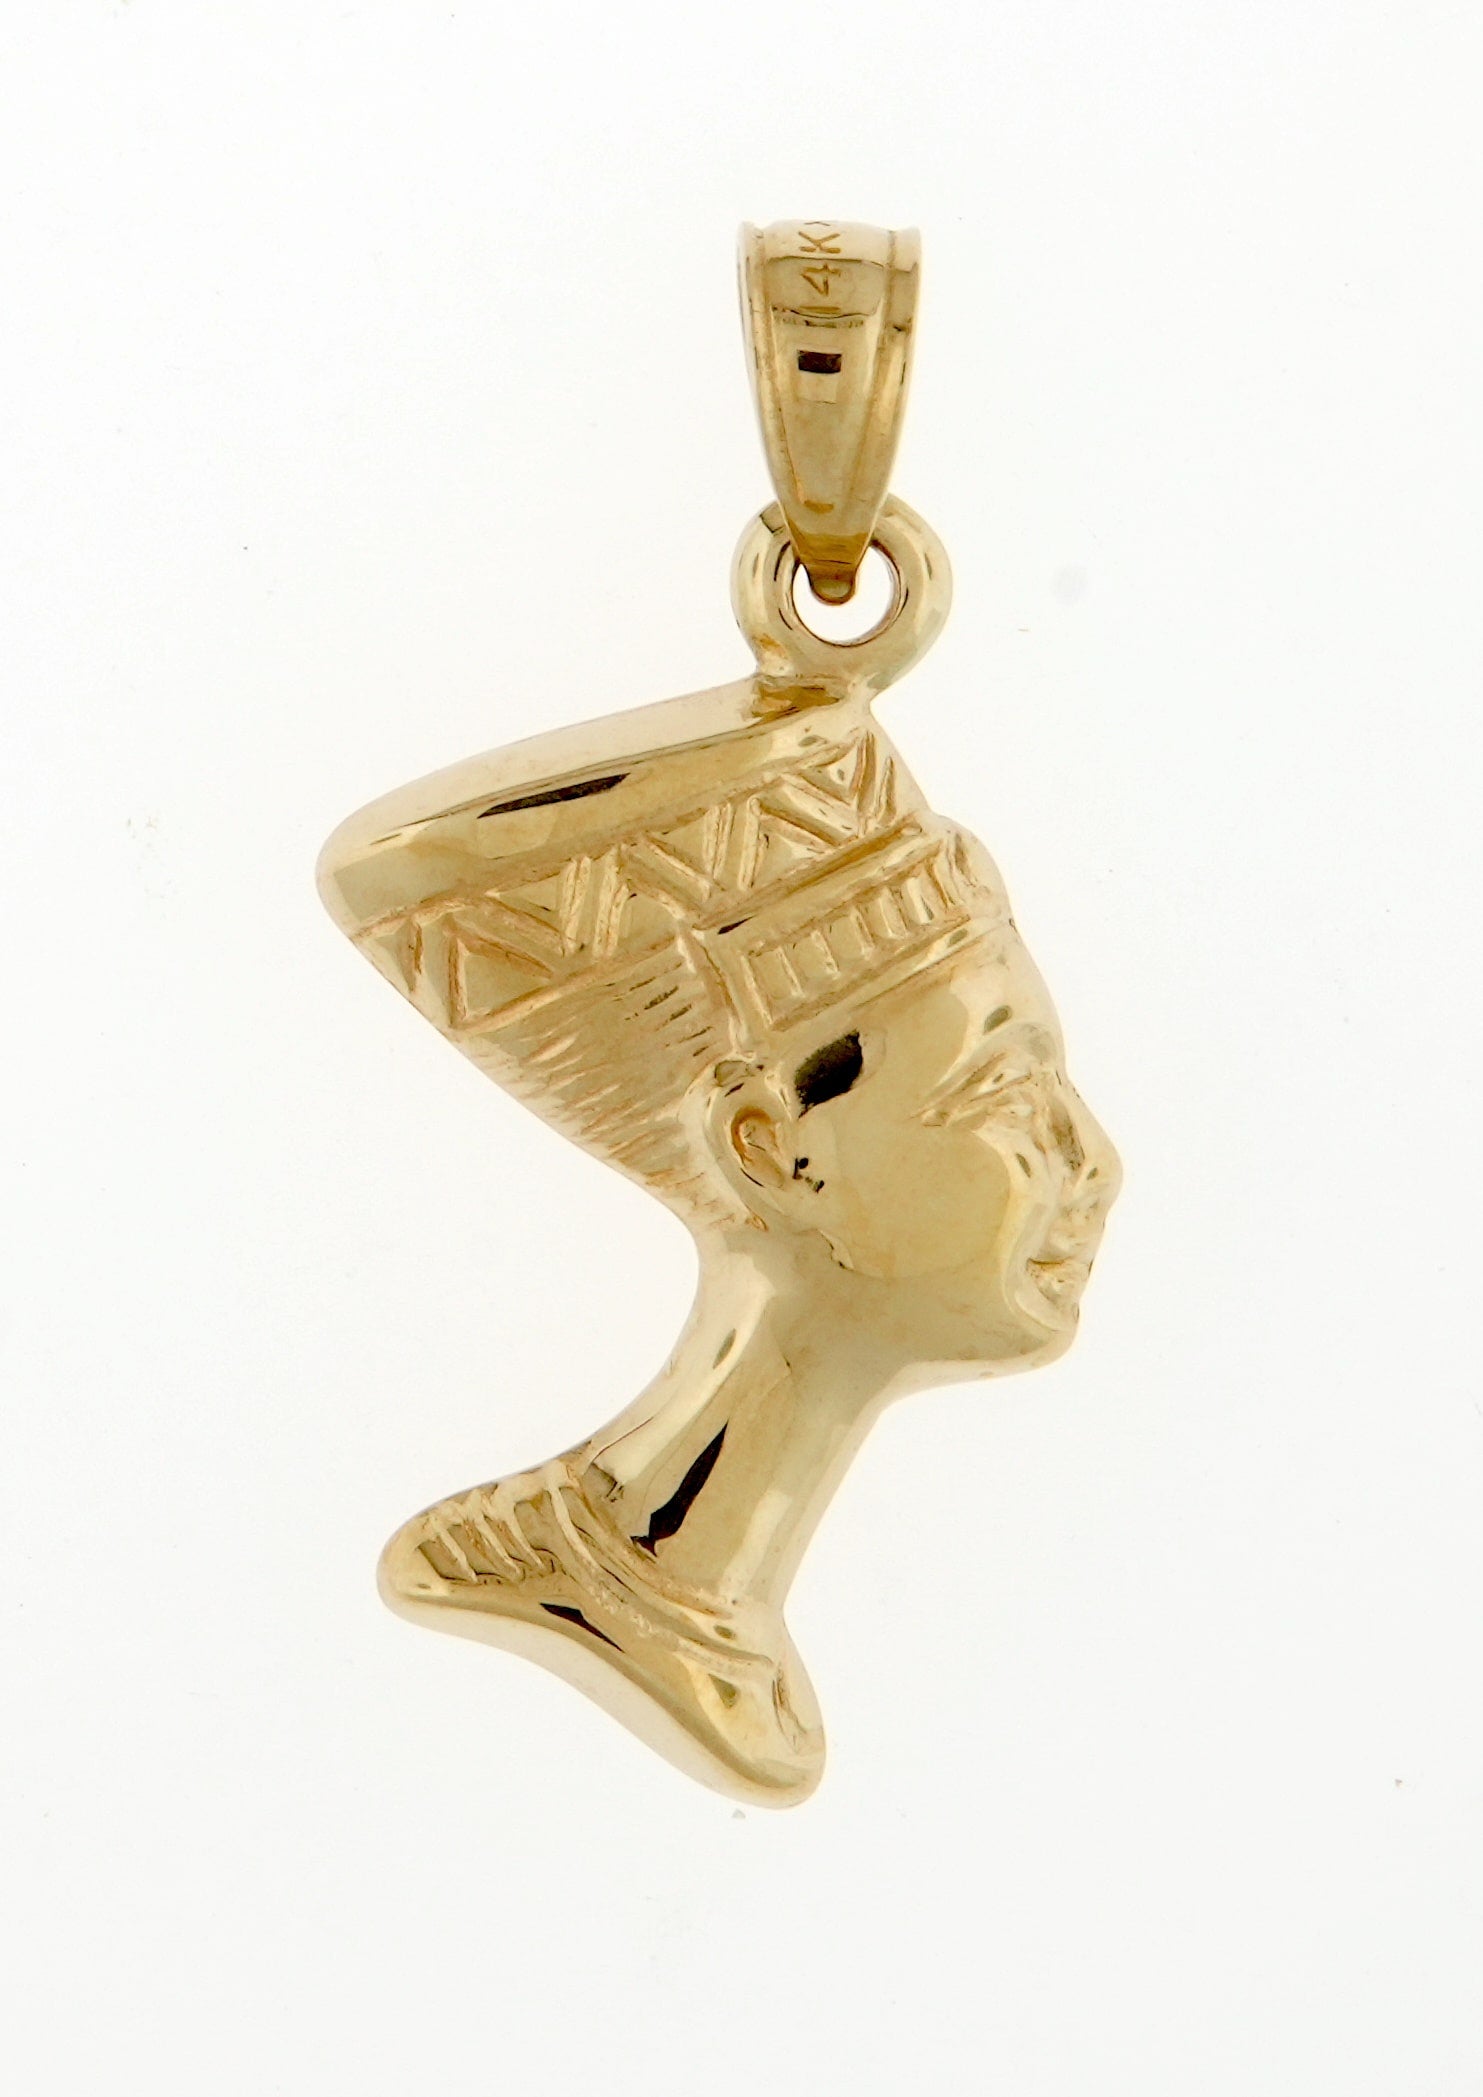 14k Yellow Gold Egyptian Nefertiti 3D Pendant Charm